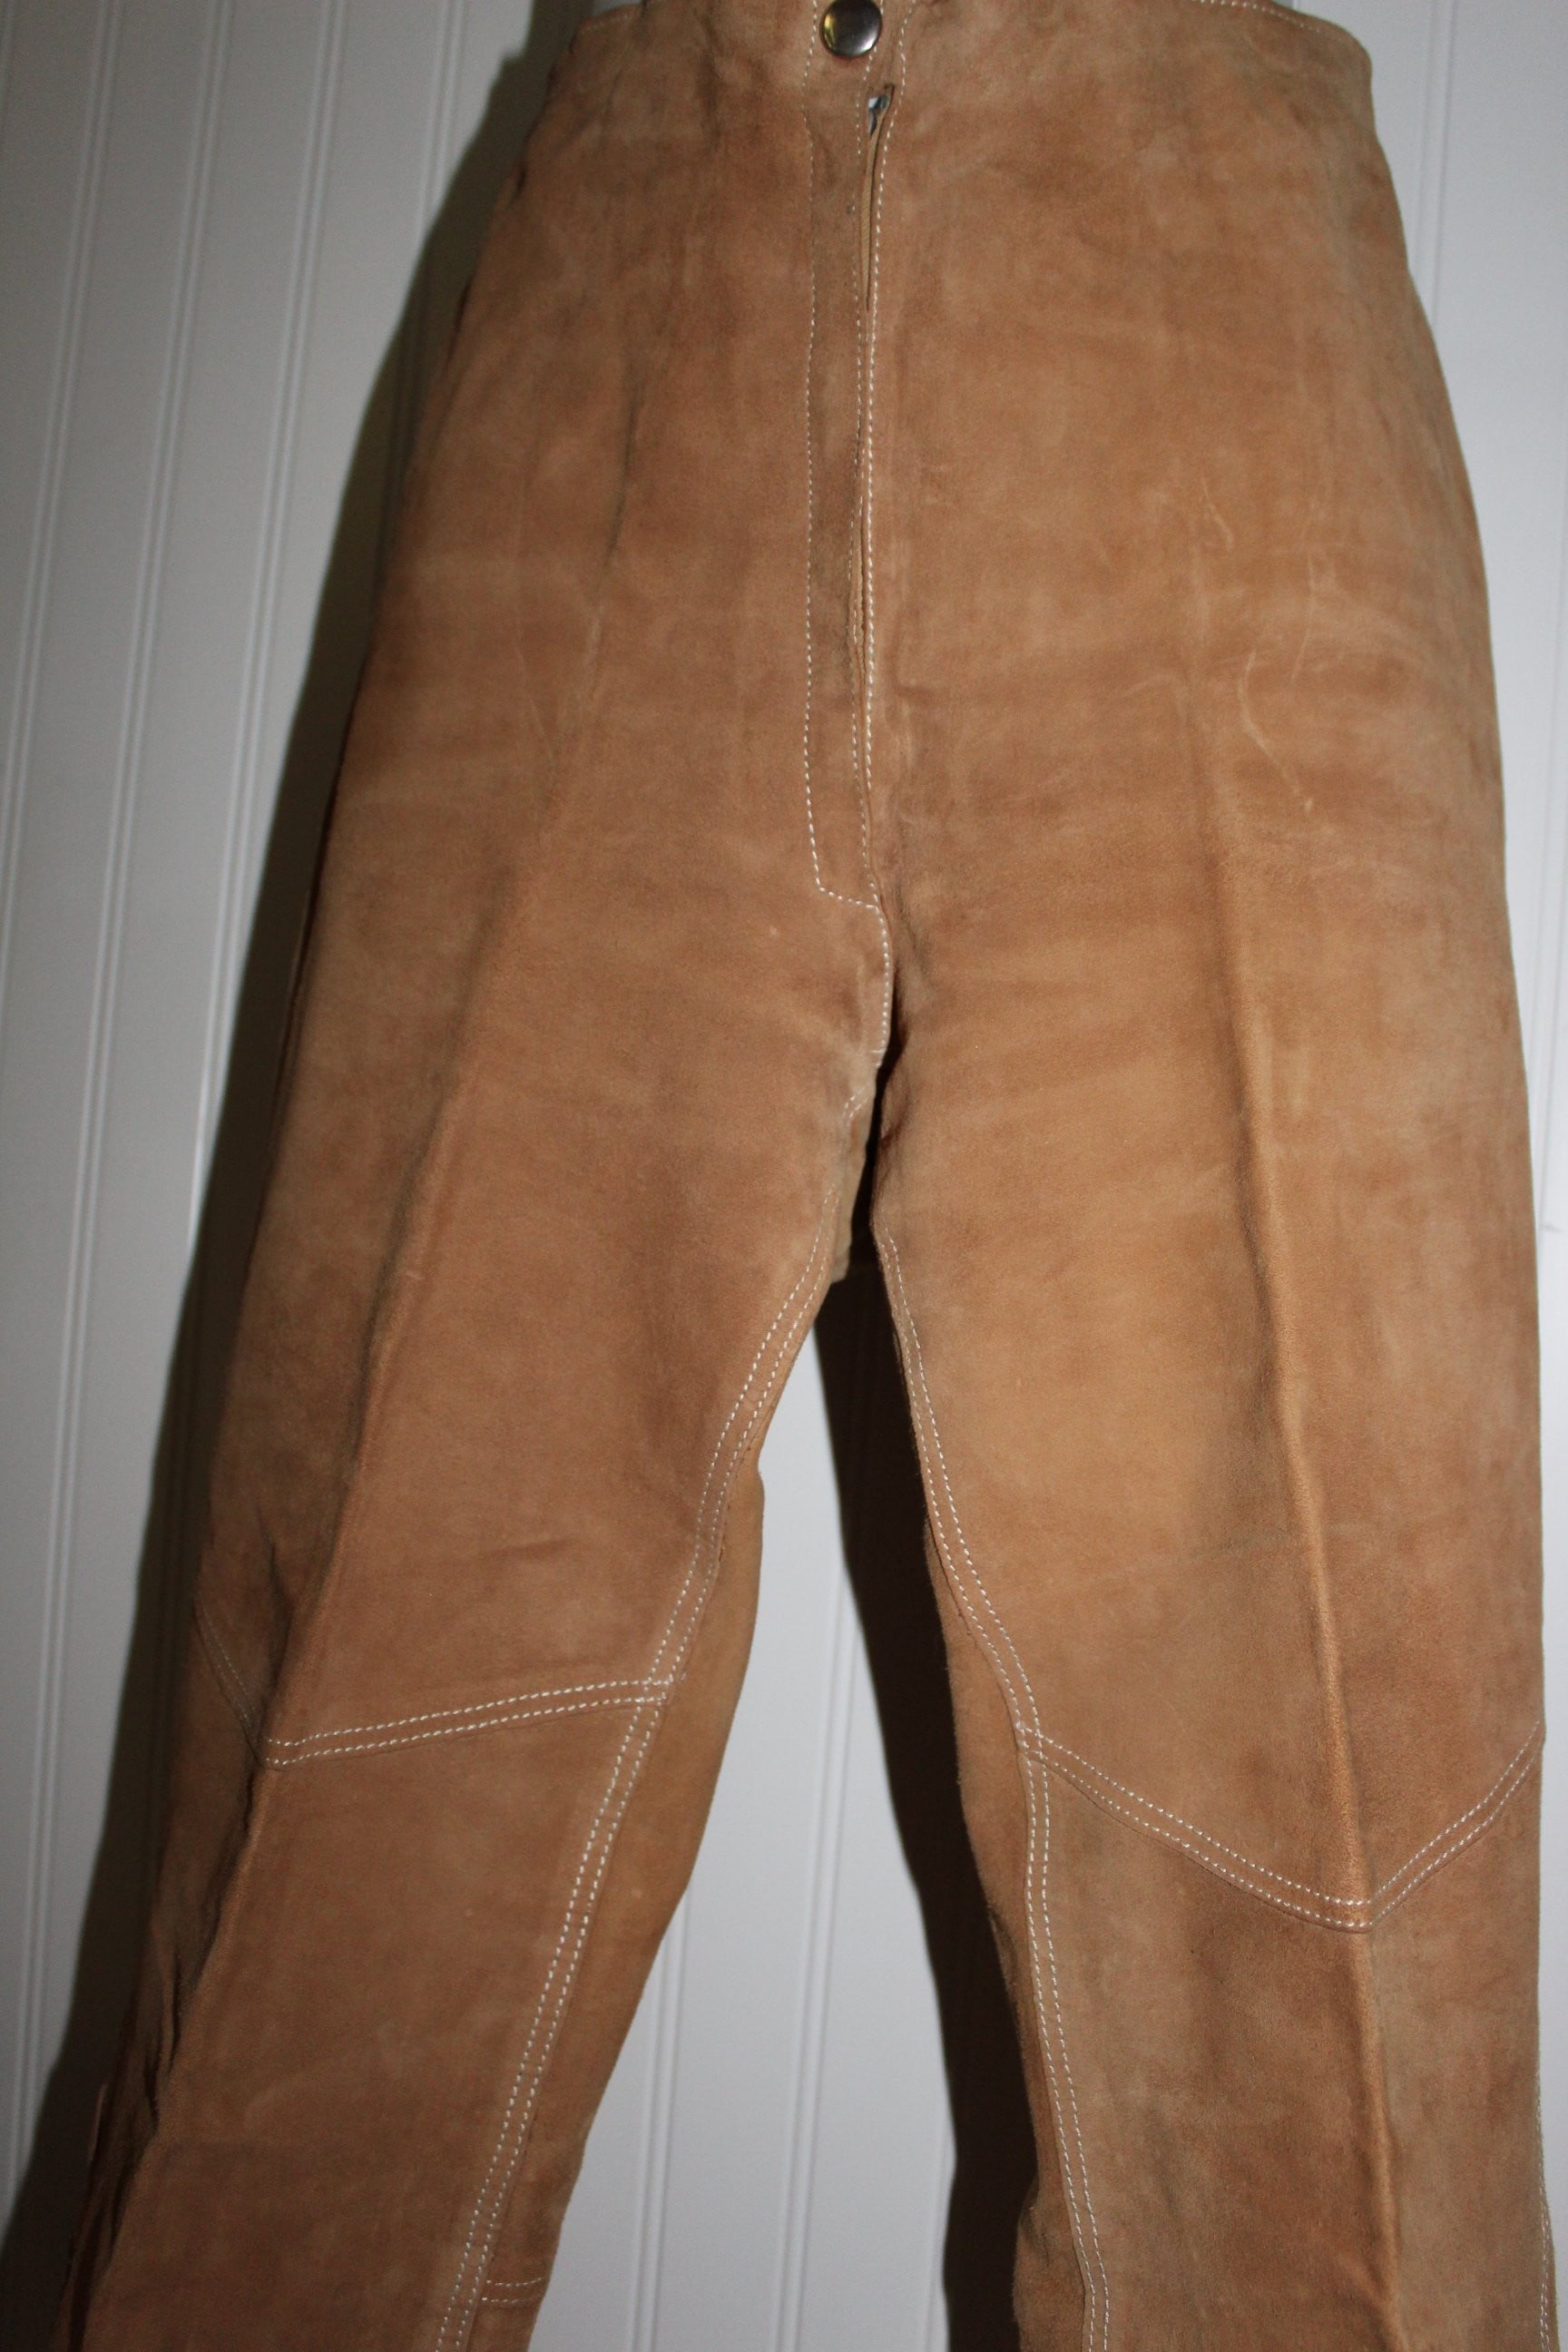 Vintage Leather Pants Laced Flare Leg Caramel Cream Top Stitch Great Detail southwest